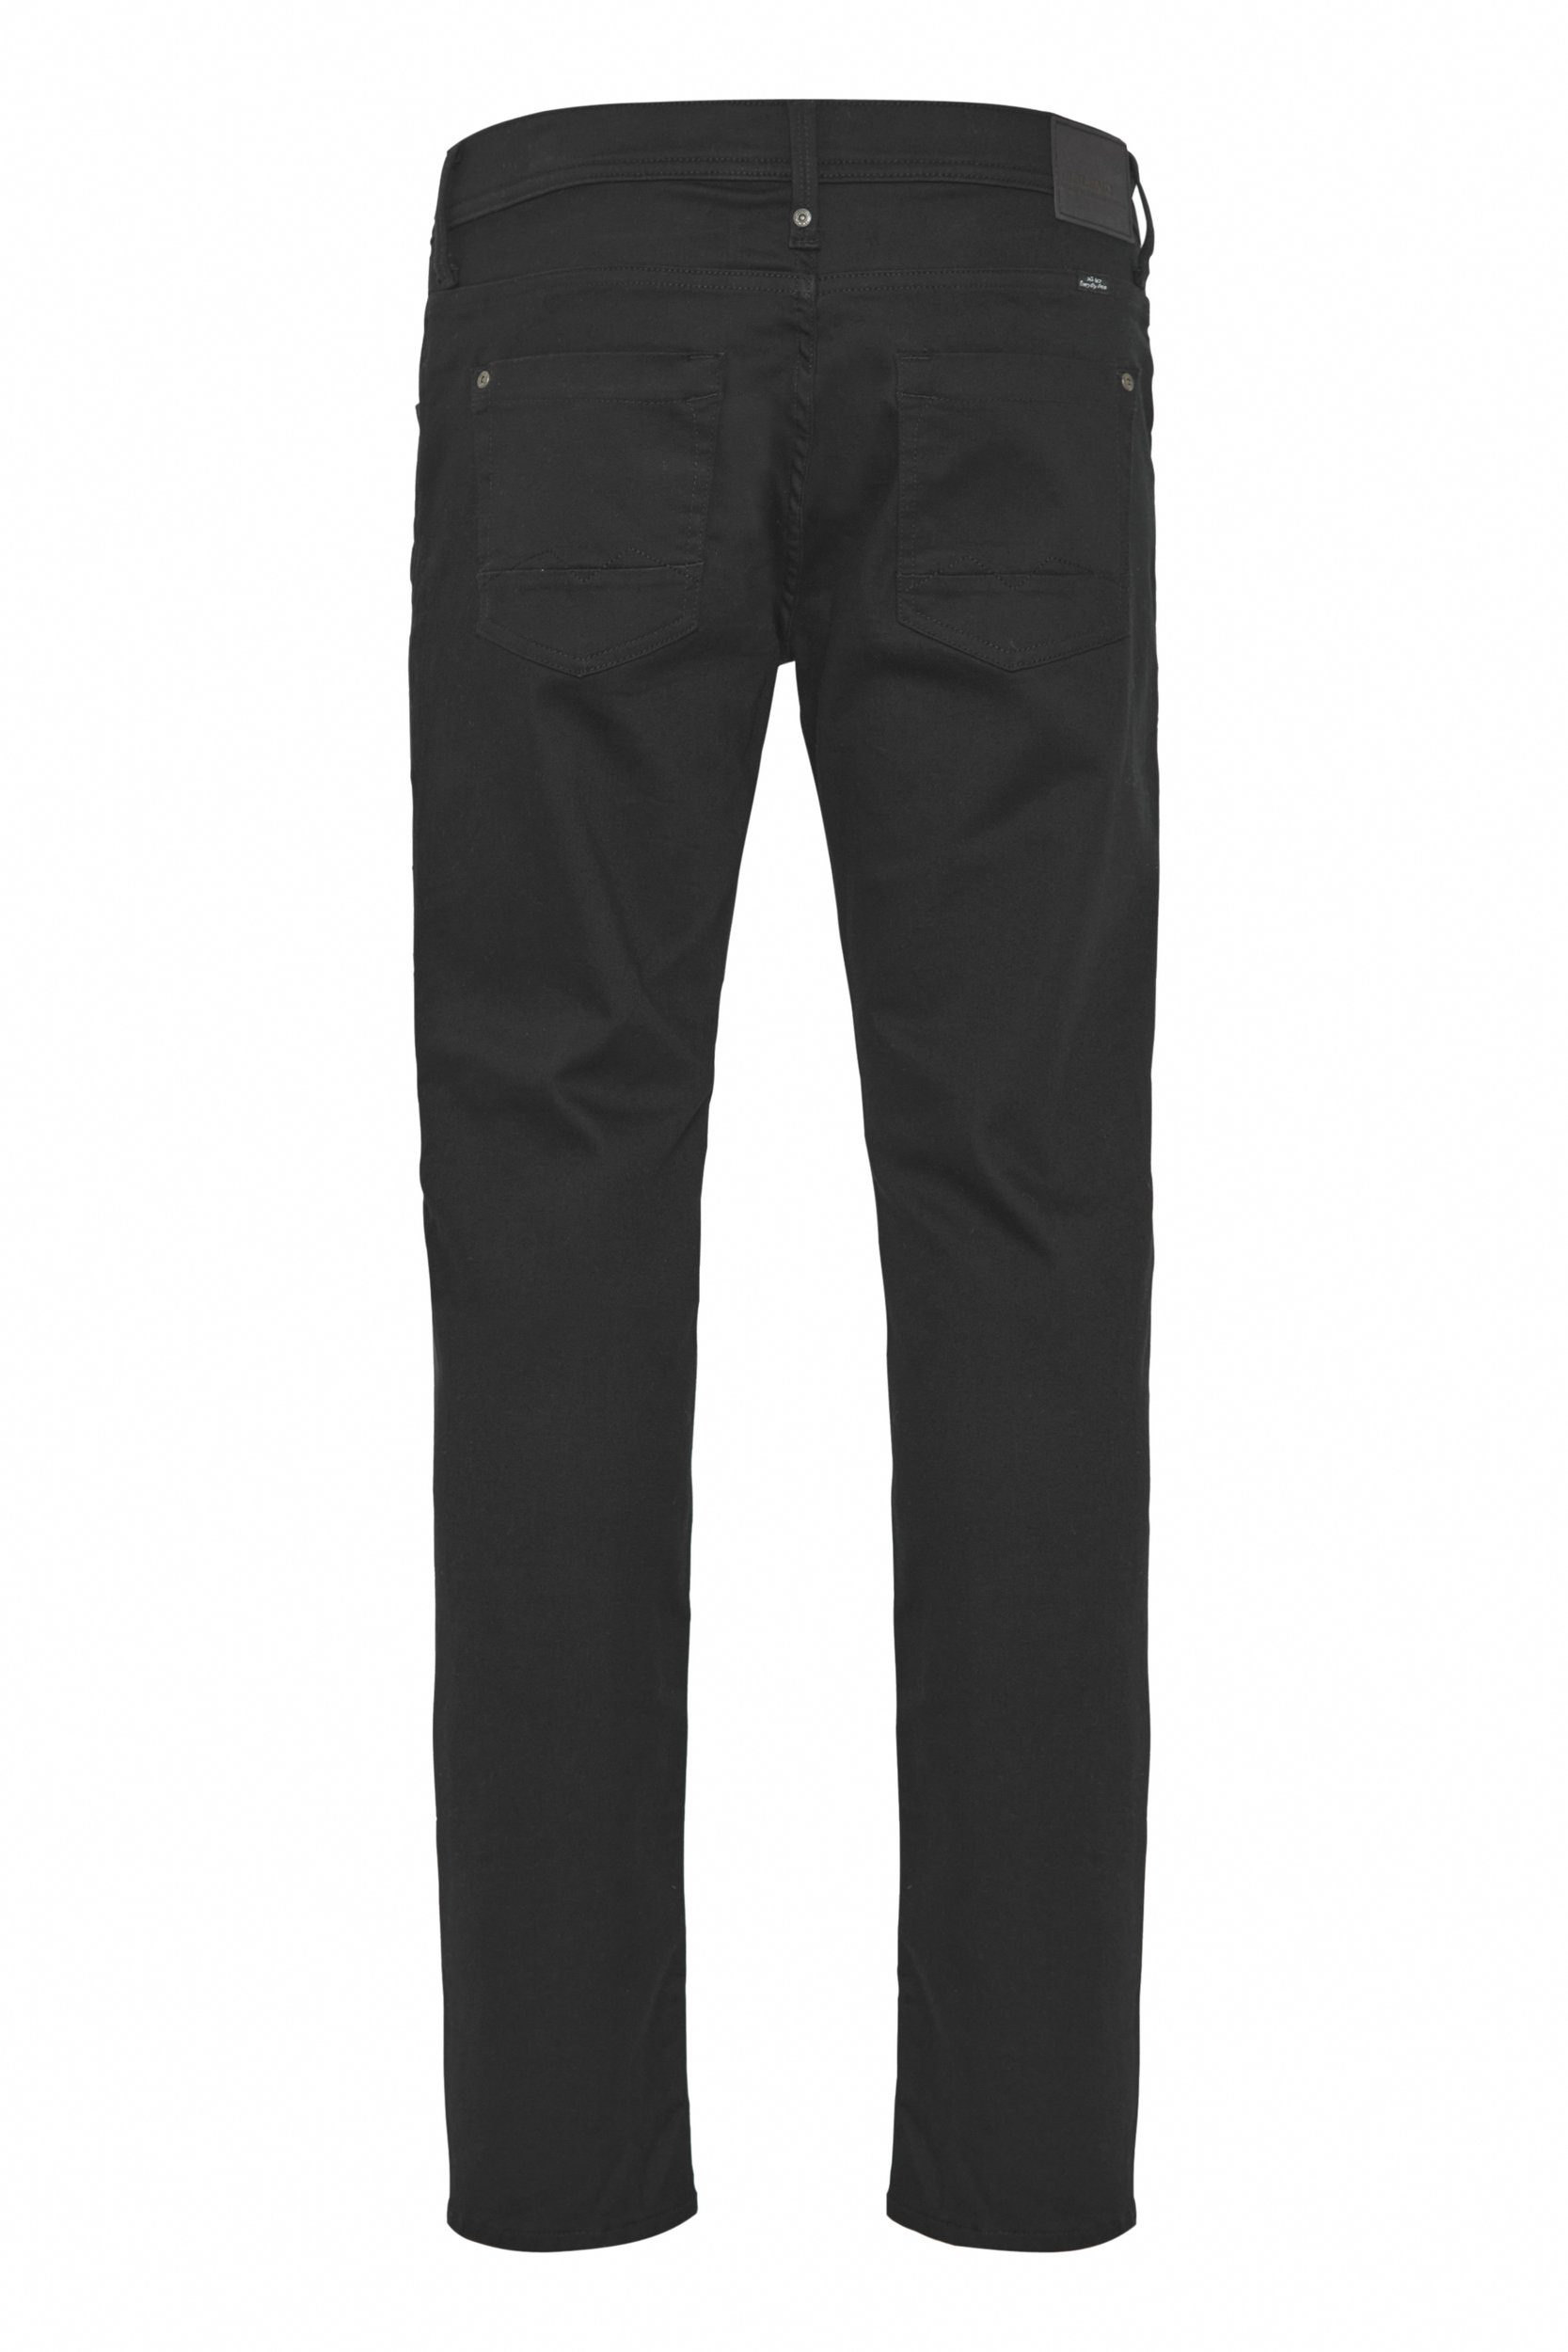 Slim FIT Grau TWISTER Denim Washed Blend Basic in Fit 5196 Stoned Hose Jeans Slim-fit-Jeans